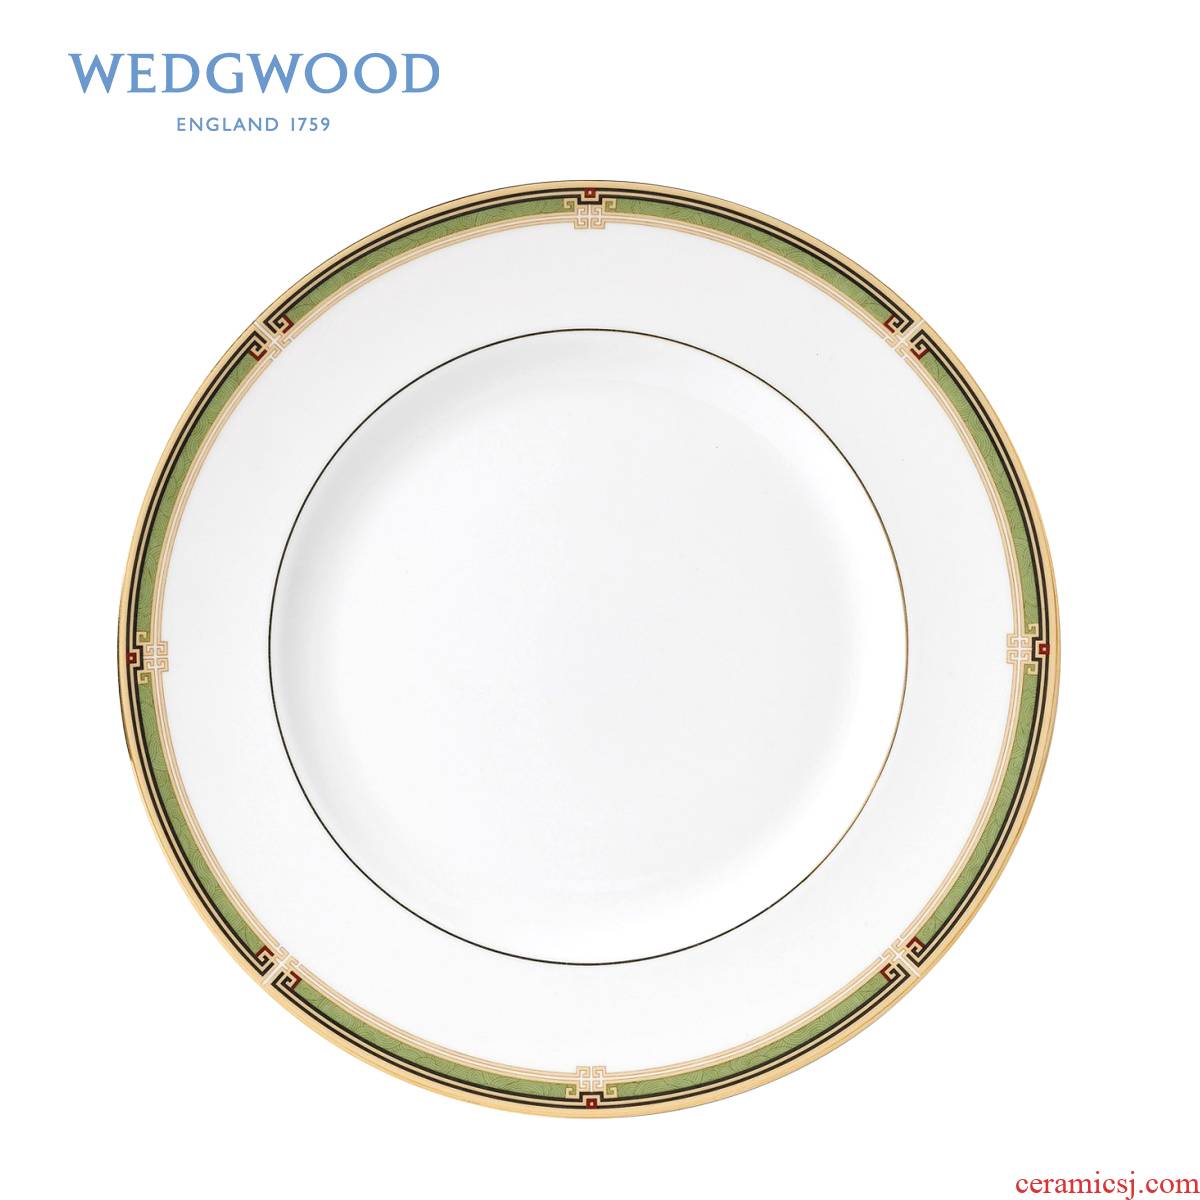 British Wedgwood peach series single only 27 cm ipads porcelain plates steak dish/plate